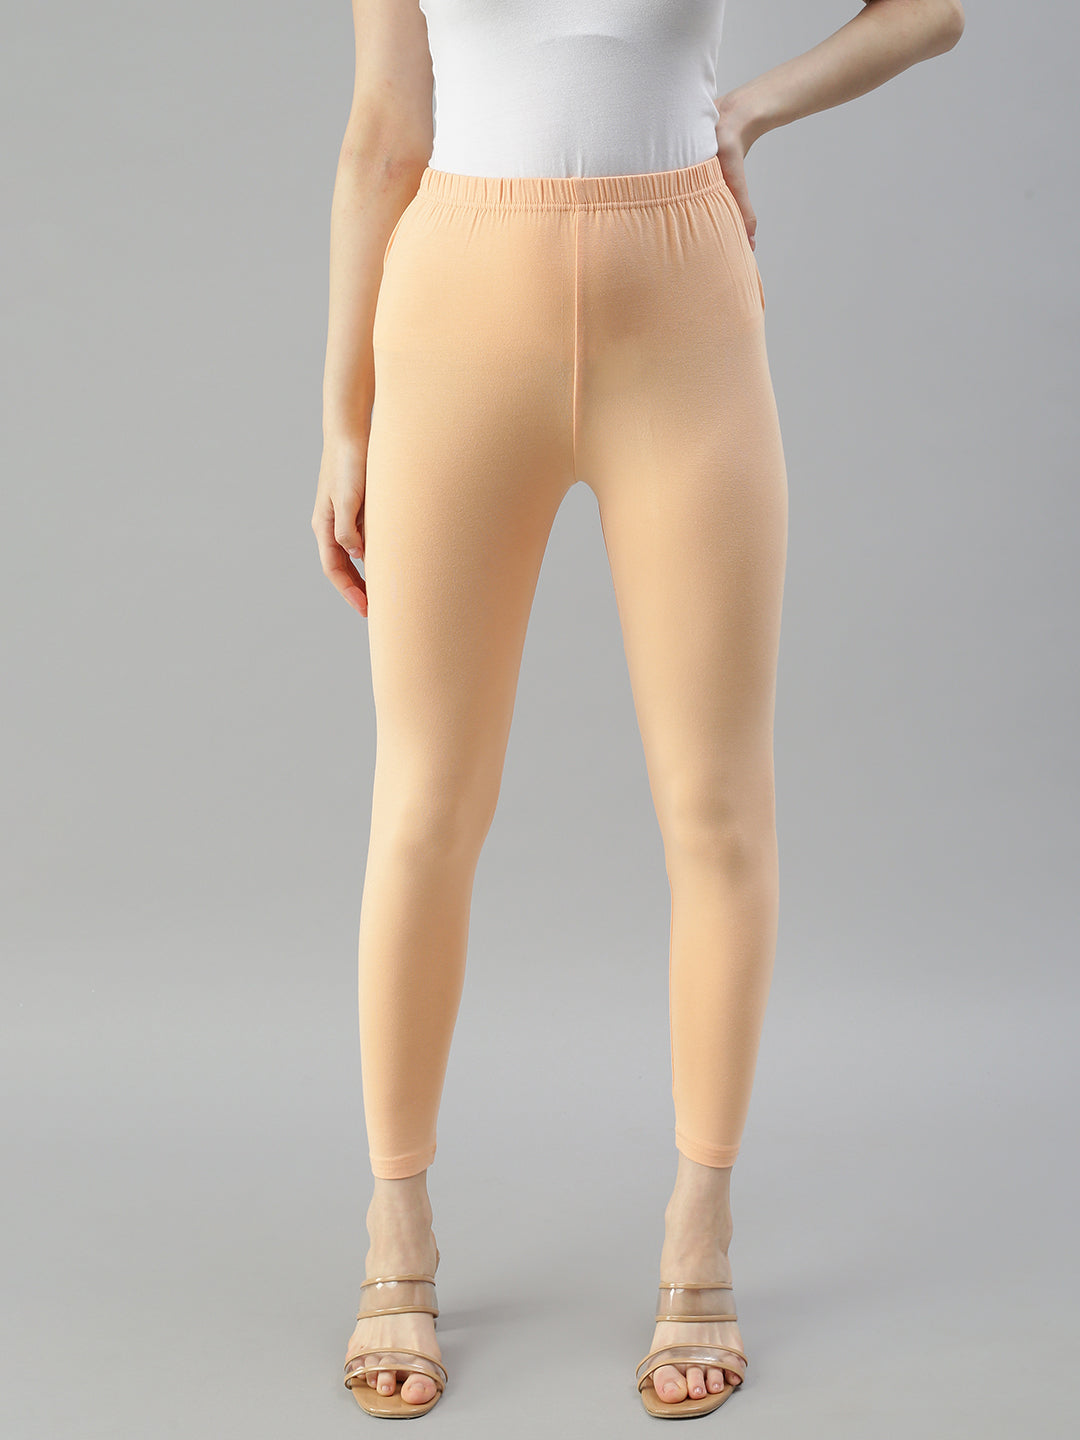 Buy Go Colors Women Solid Dark Pink Cotton Cropped Leggings online